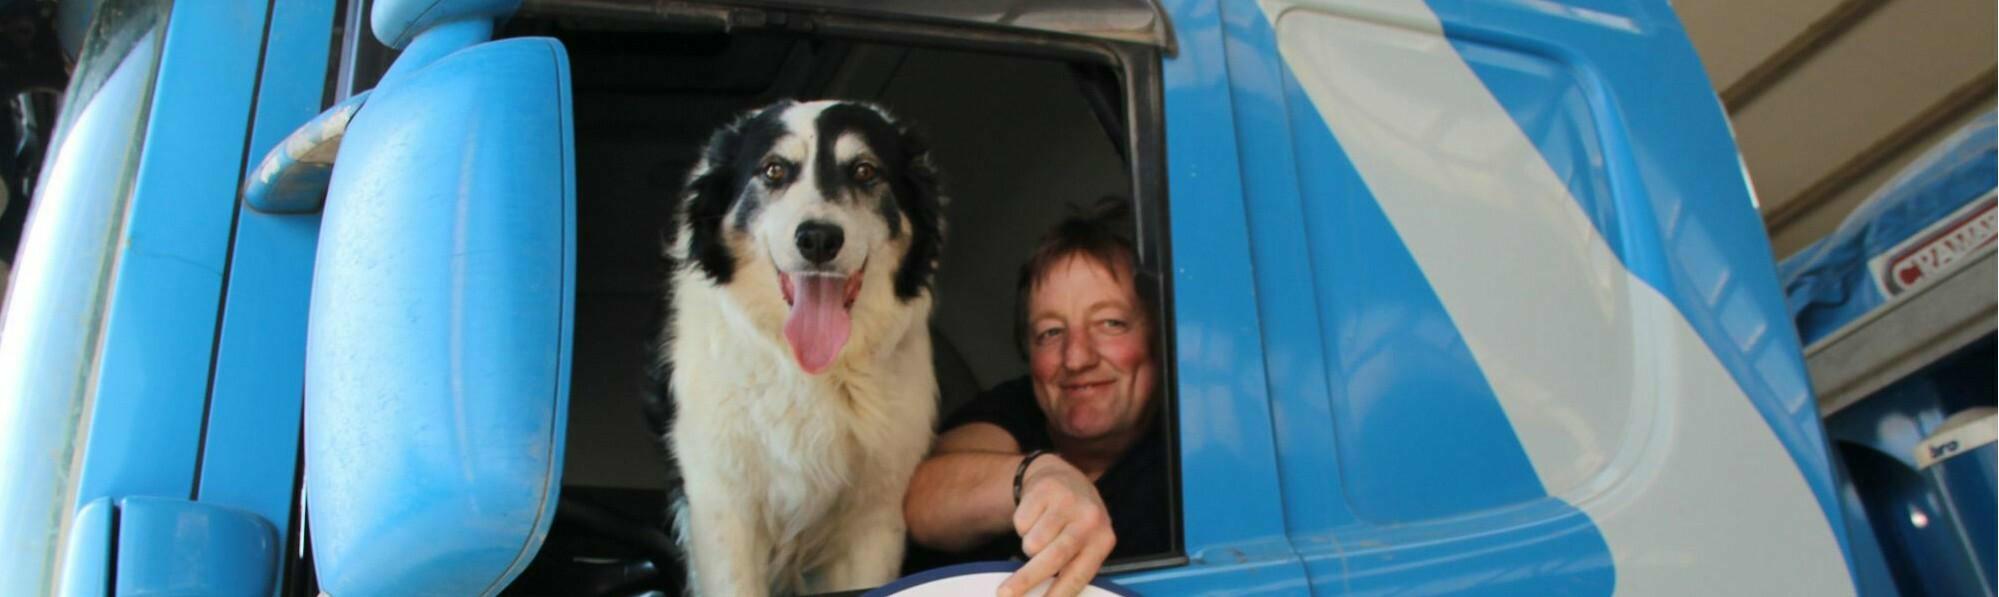 Meet the STAS dog Jules, the border collie co-pilot